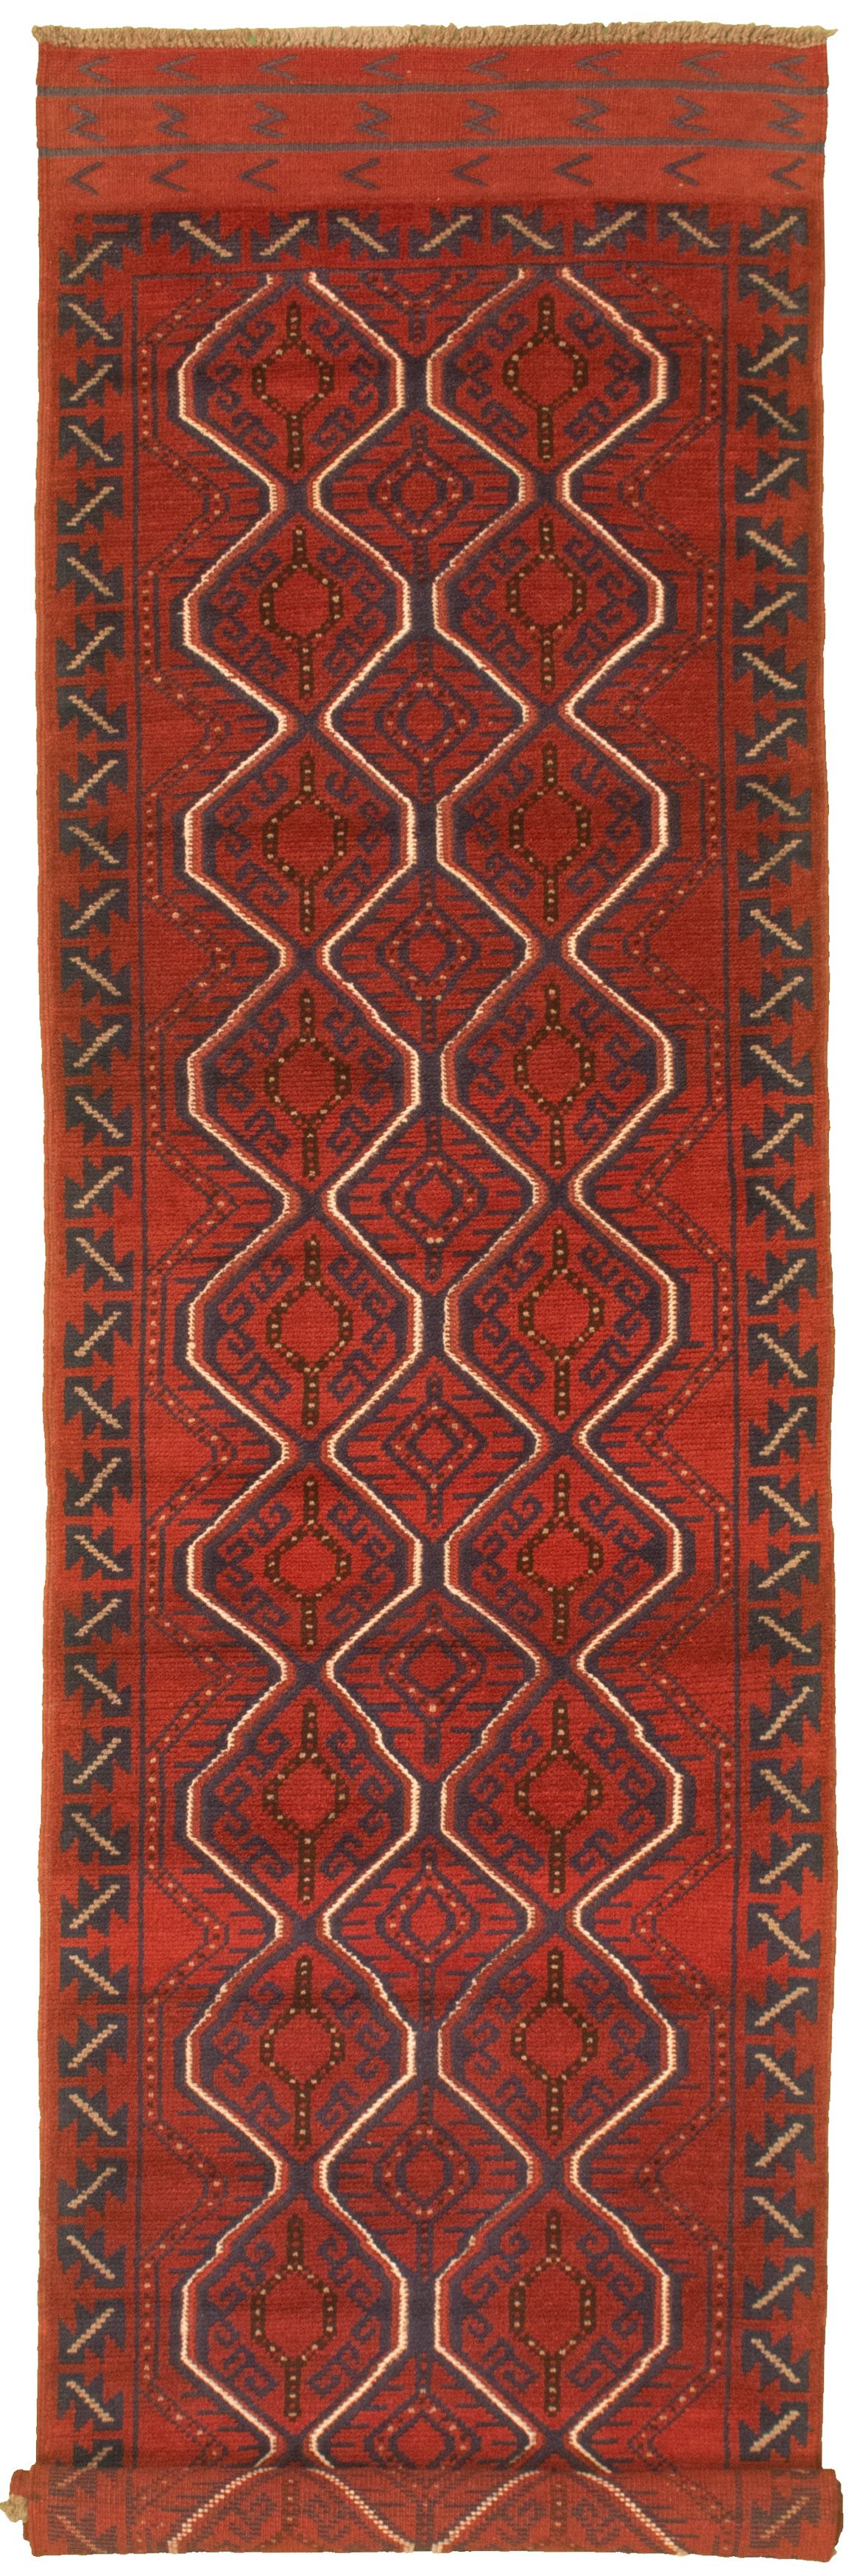 Hand-knotted Tajik Red Wool Rug 2'8" x 11'4" Size: 2'8" x 11'4"  